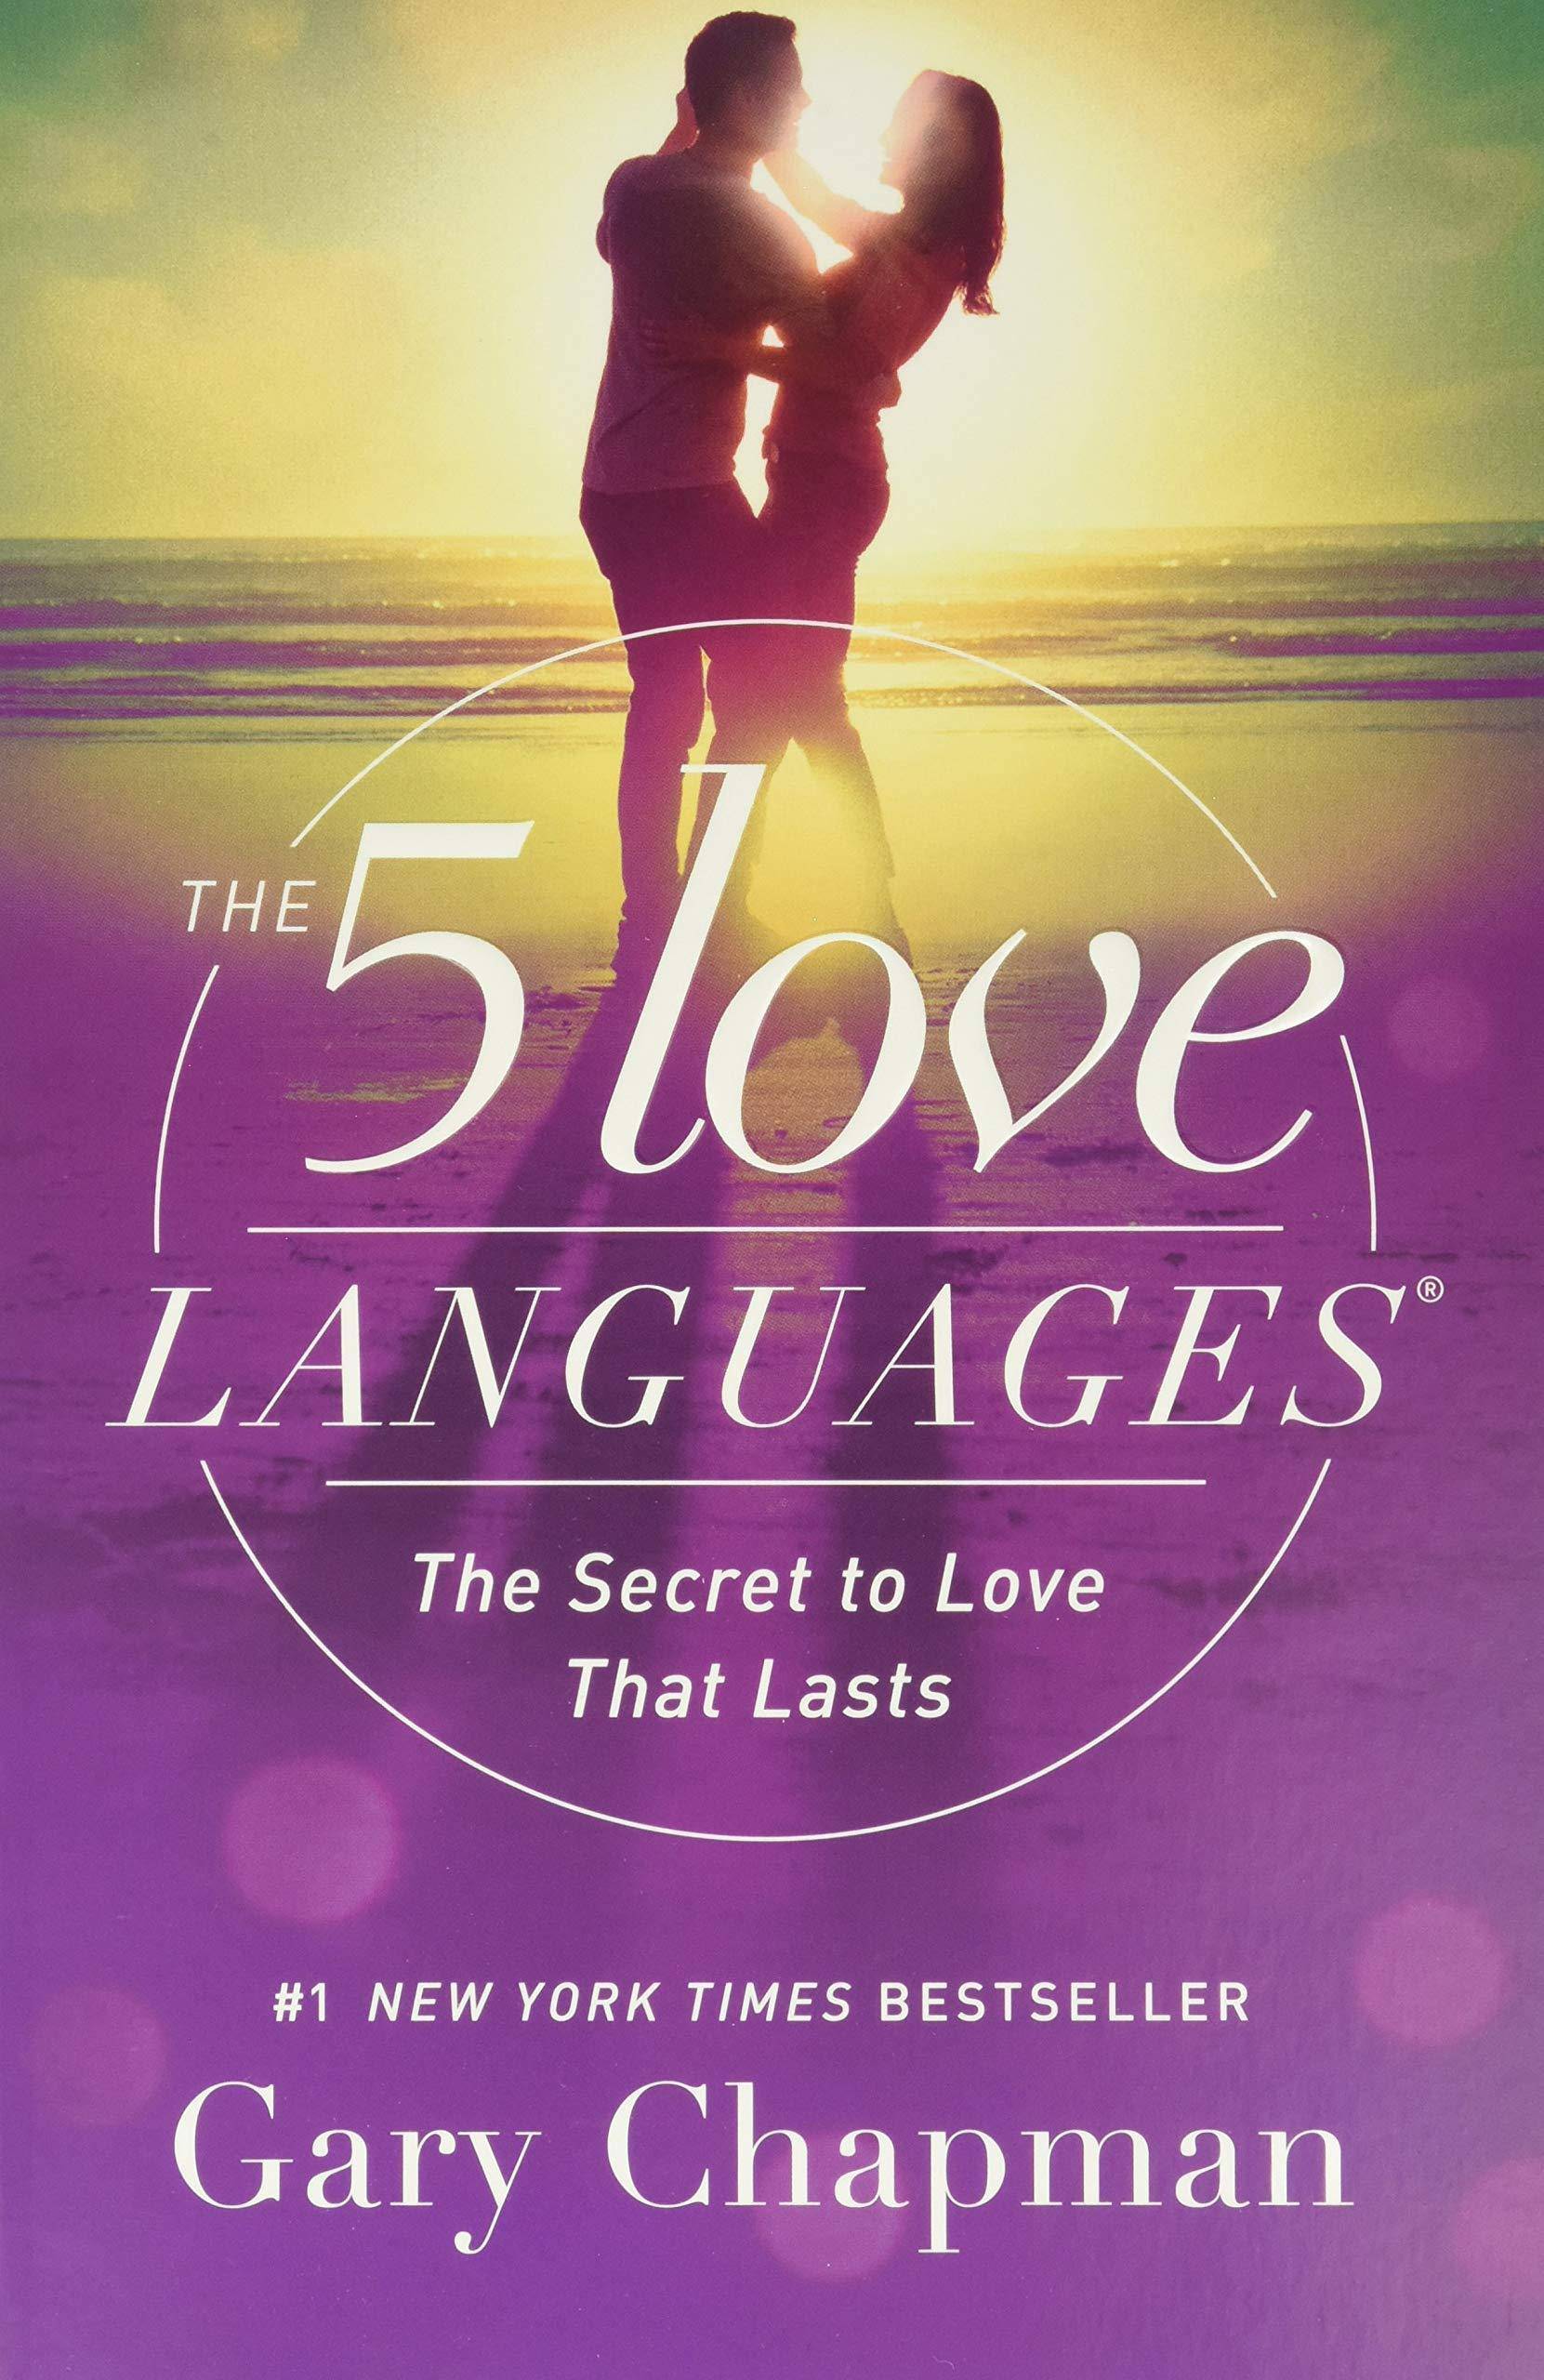 5 Love Languages: The Secret to Love That Lasts - SureShot Books Publishing LLC